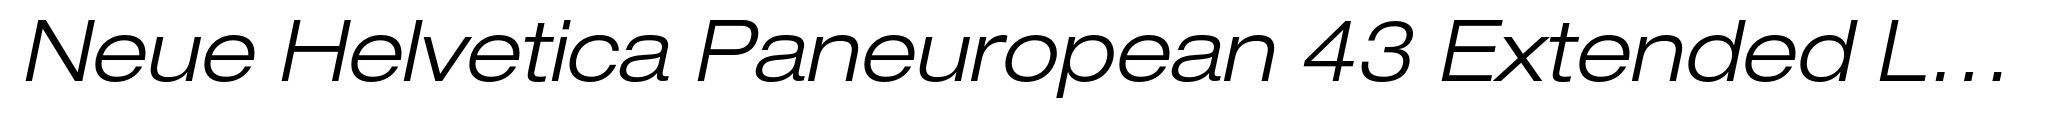 Neue Helvetica Paneuropean 43 Extended Light Oblique image